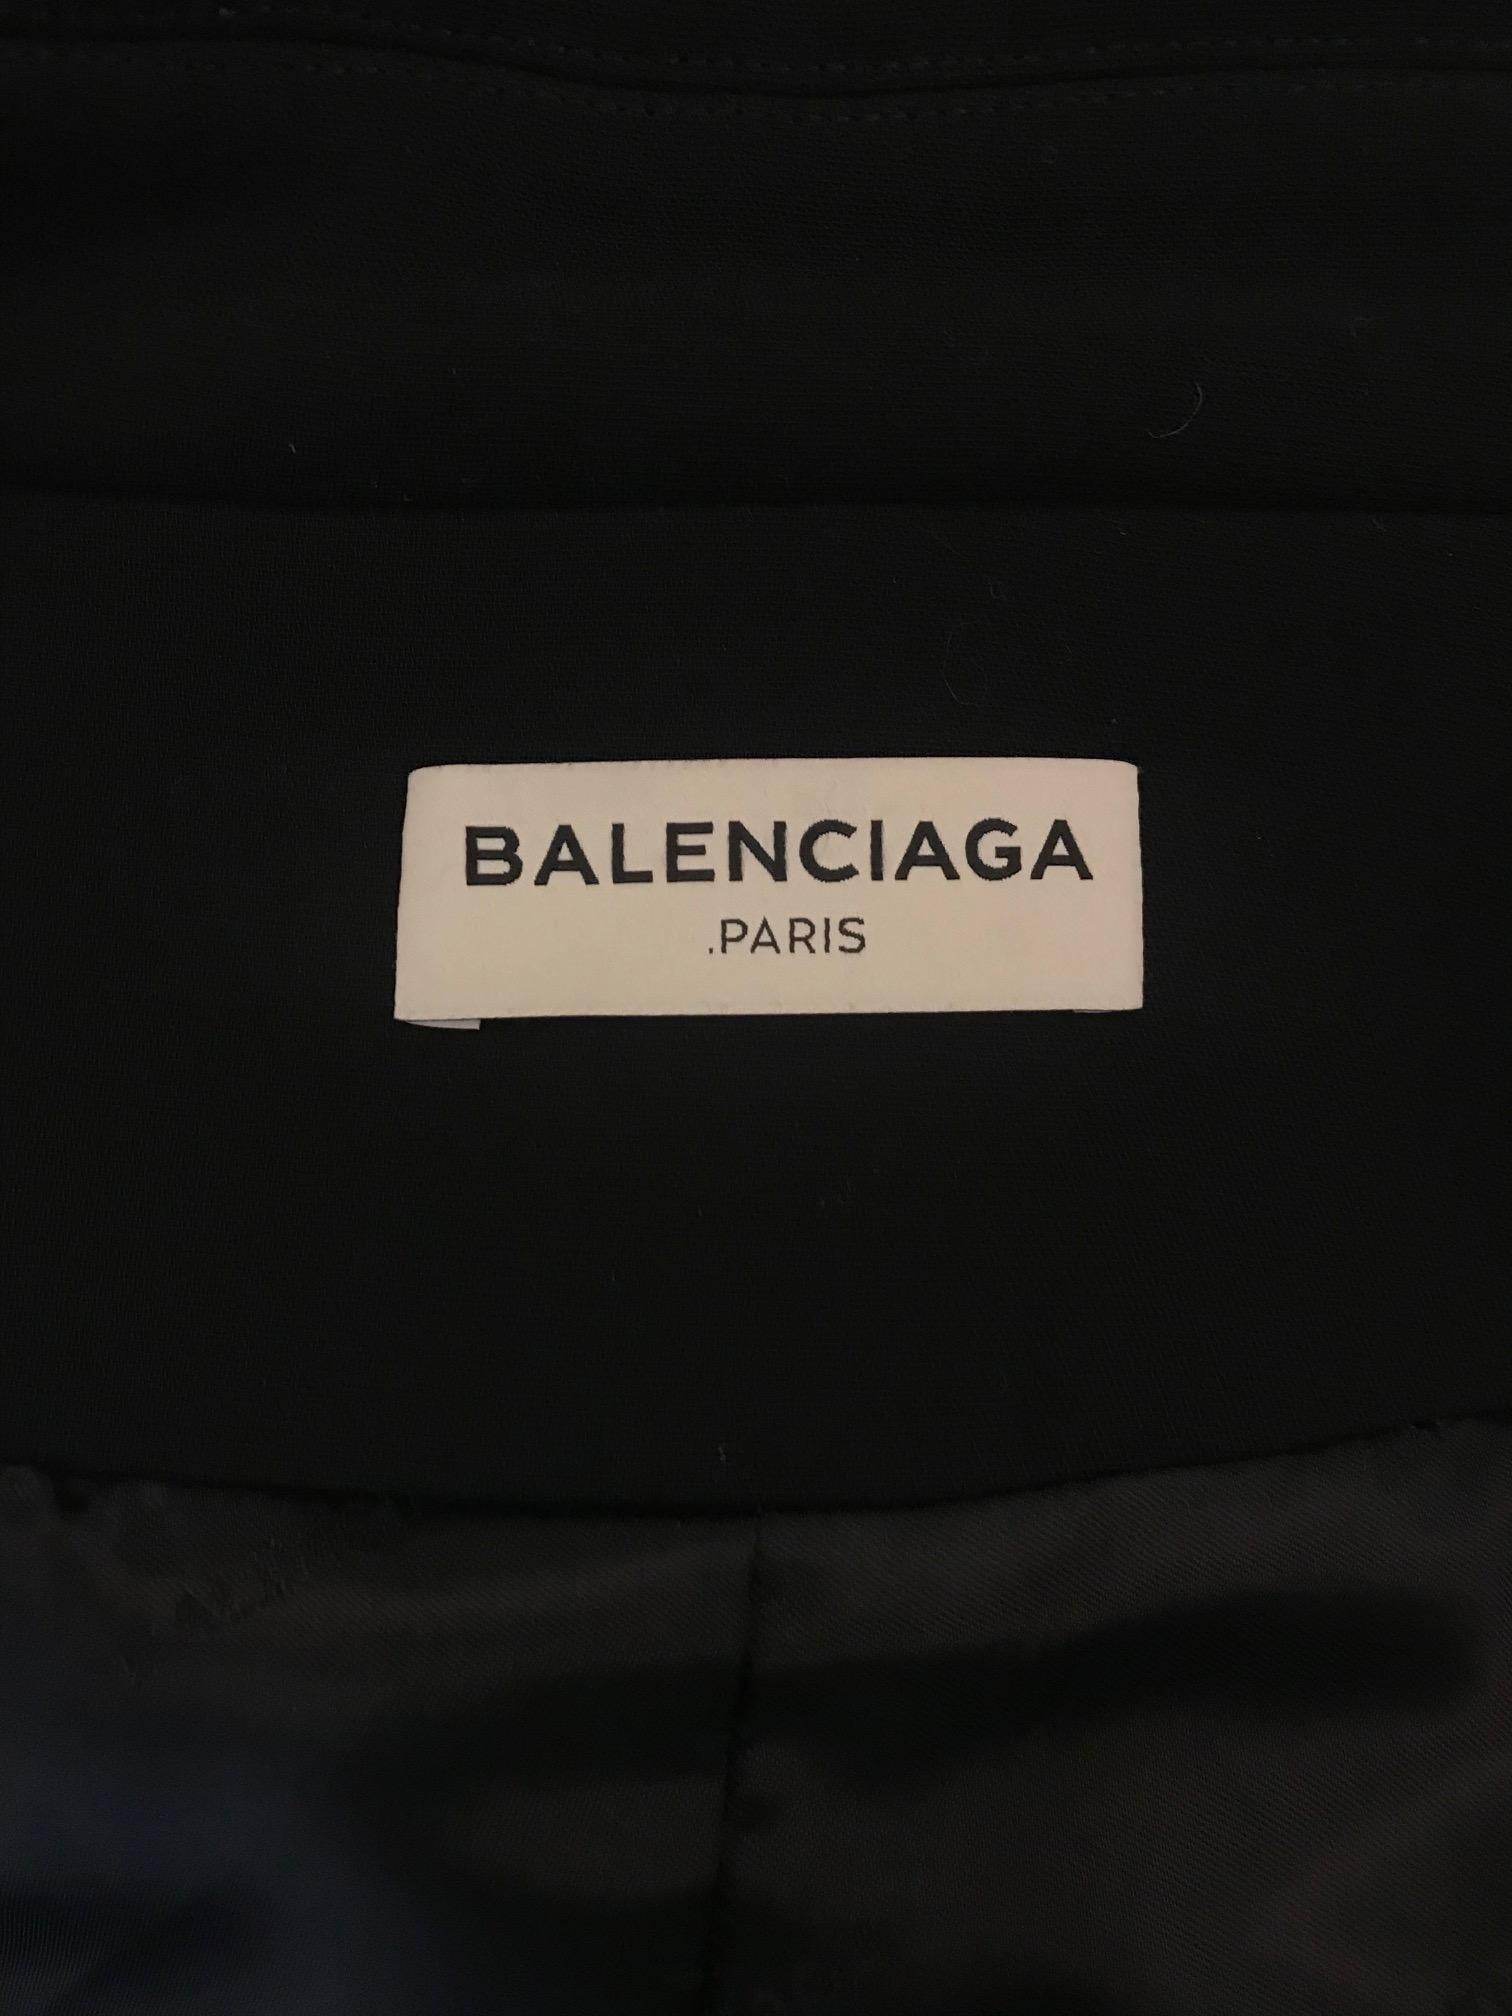 Balenciaga Opera Coat For Sale 2